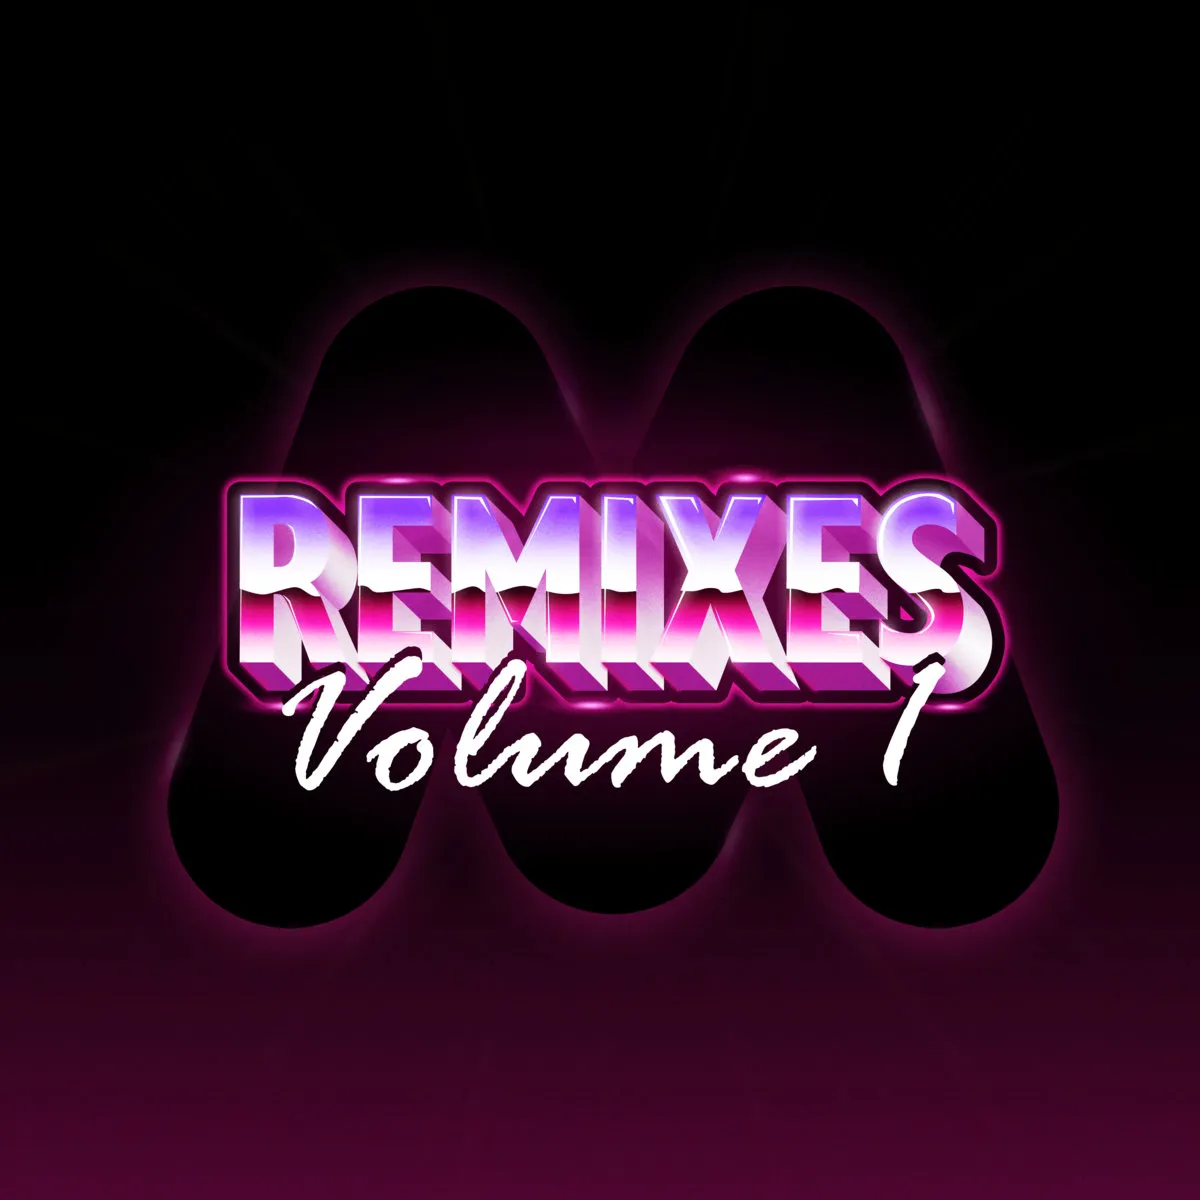 Remixes Volume 1
© (C) 2020 Mordi